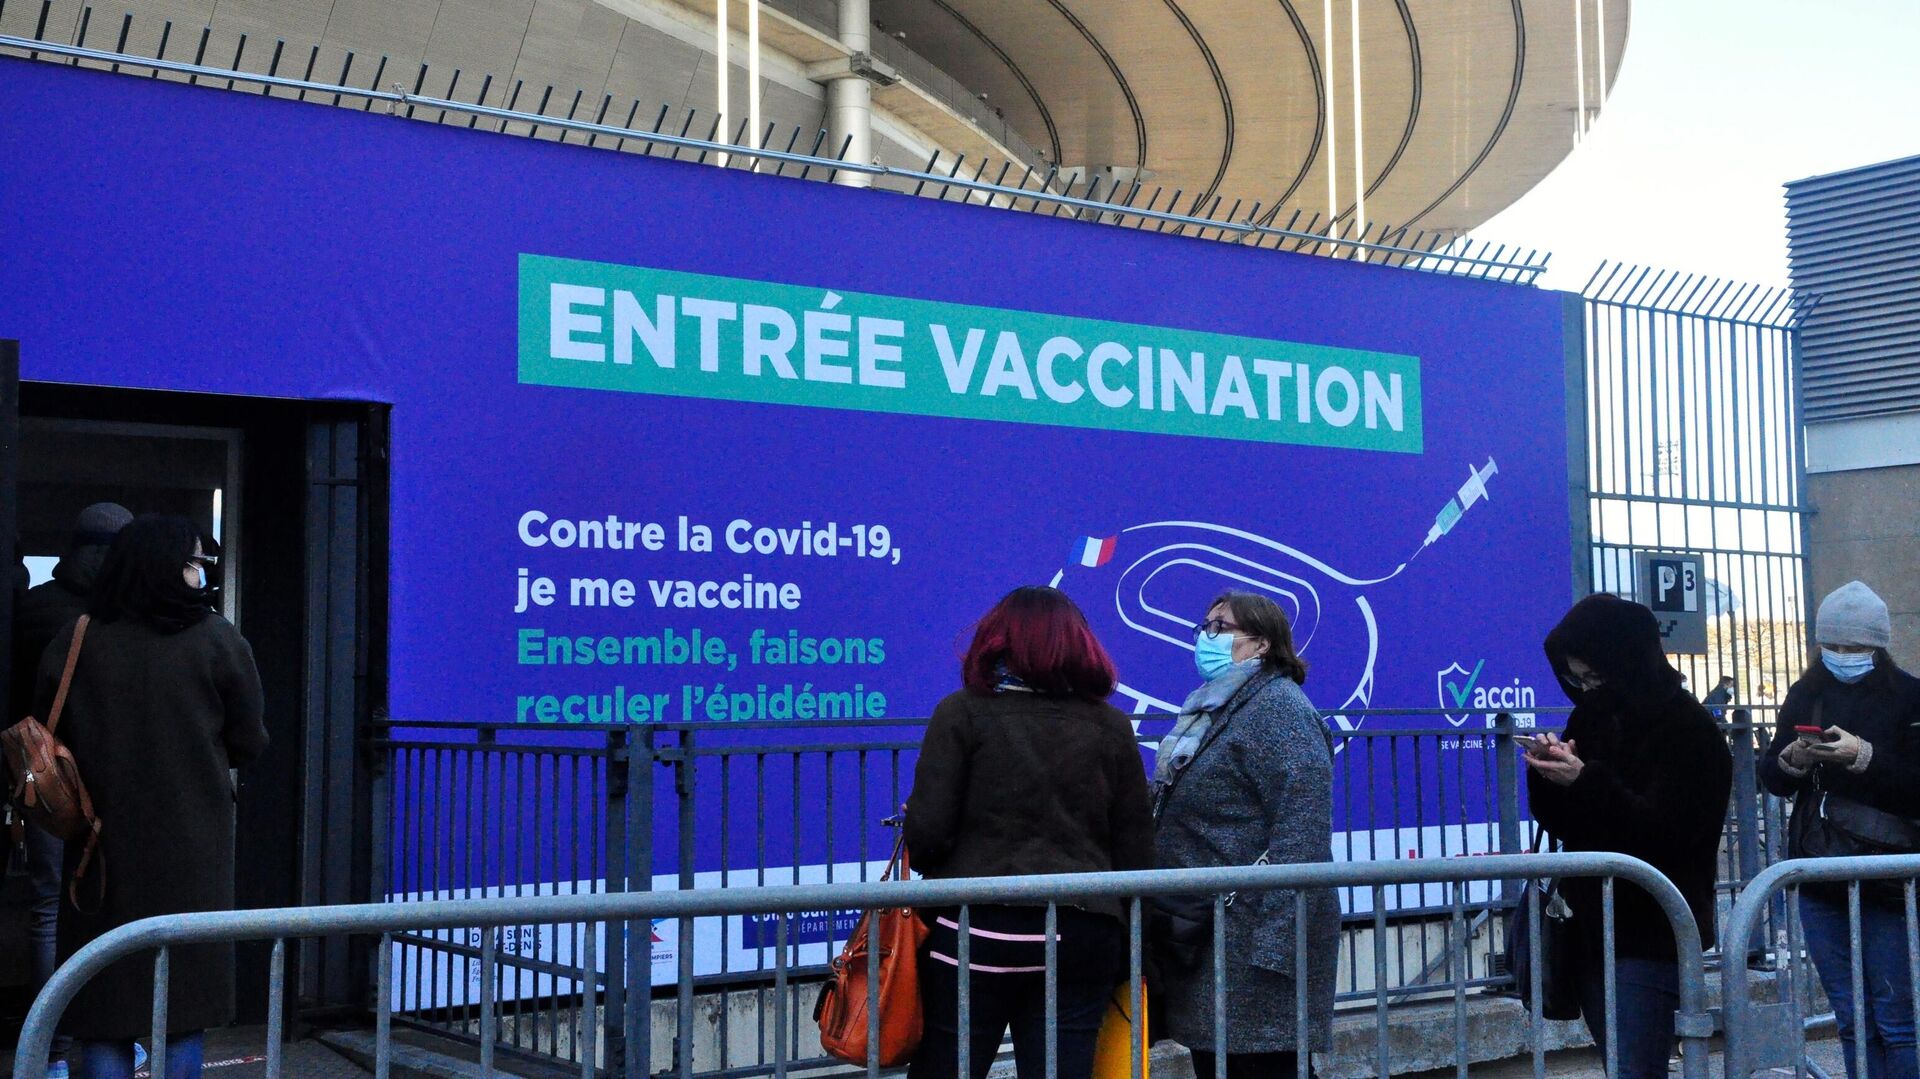 Местные жители стоят в очереди на вакцинацию от коронавируса в центре вакцинодроме на стадионе Стад де Франс - РИА Новости, 1920, 09.06.2021